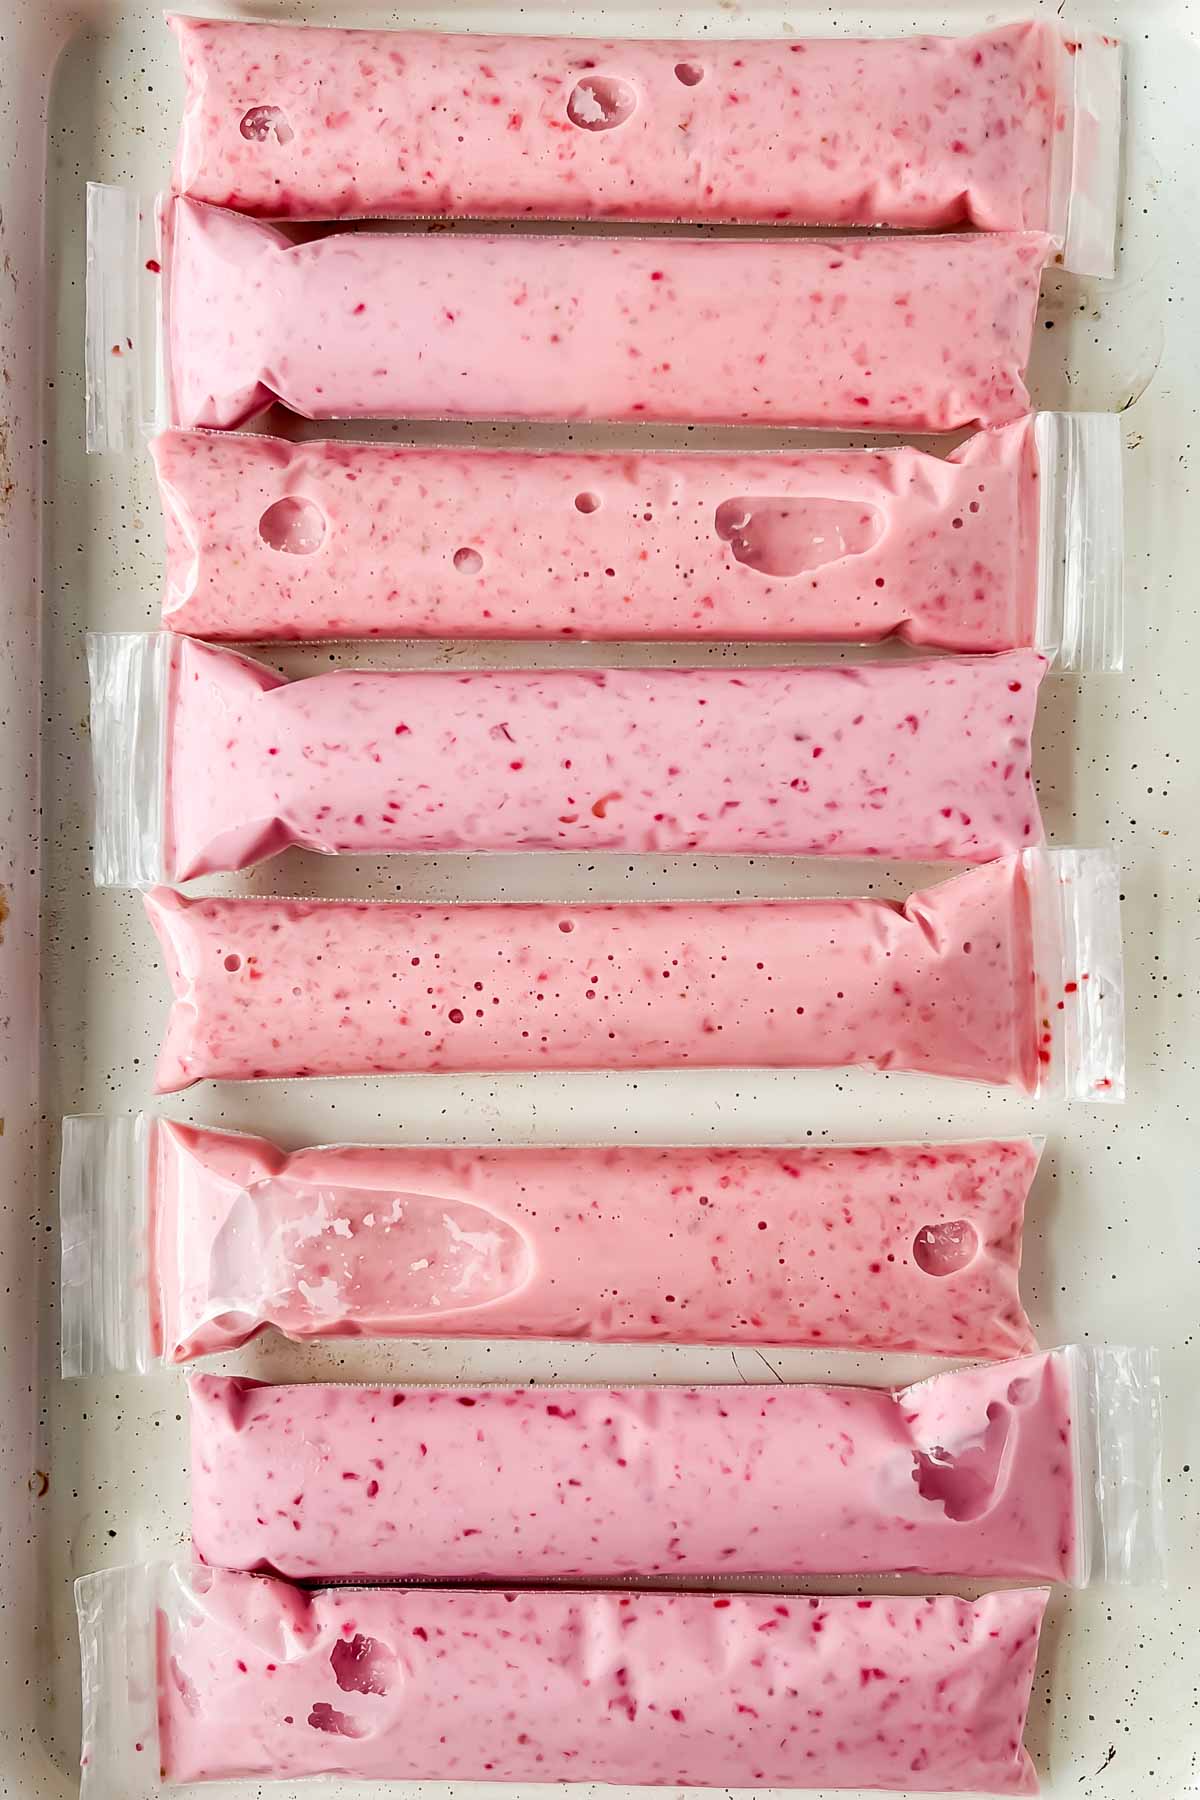 strawberry yogurt frozen in in plastics tubes on white baking tray.